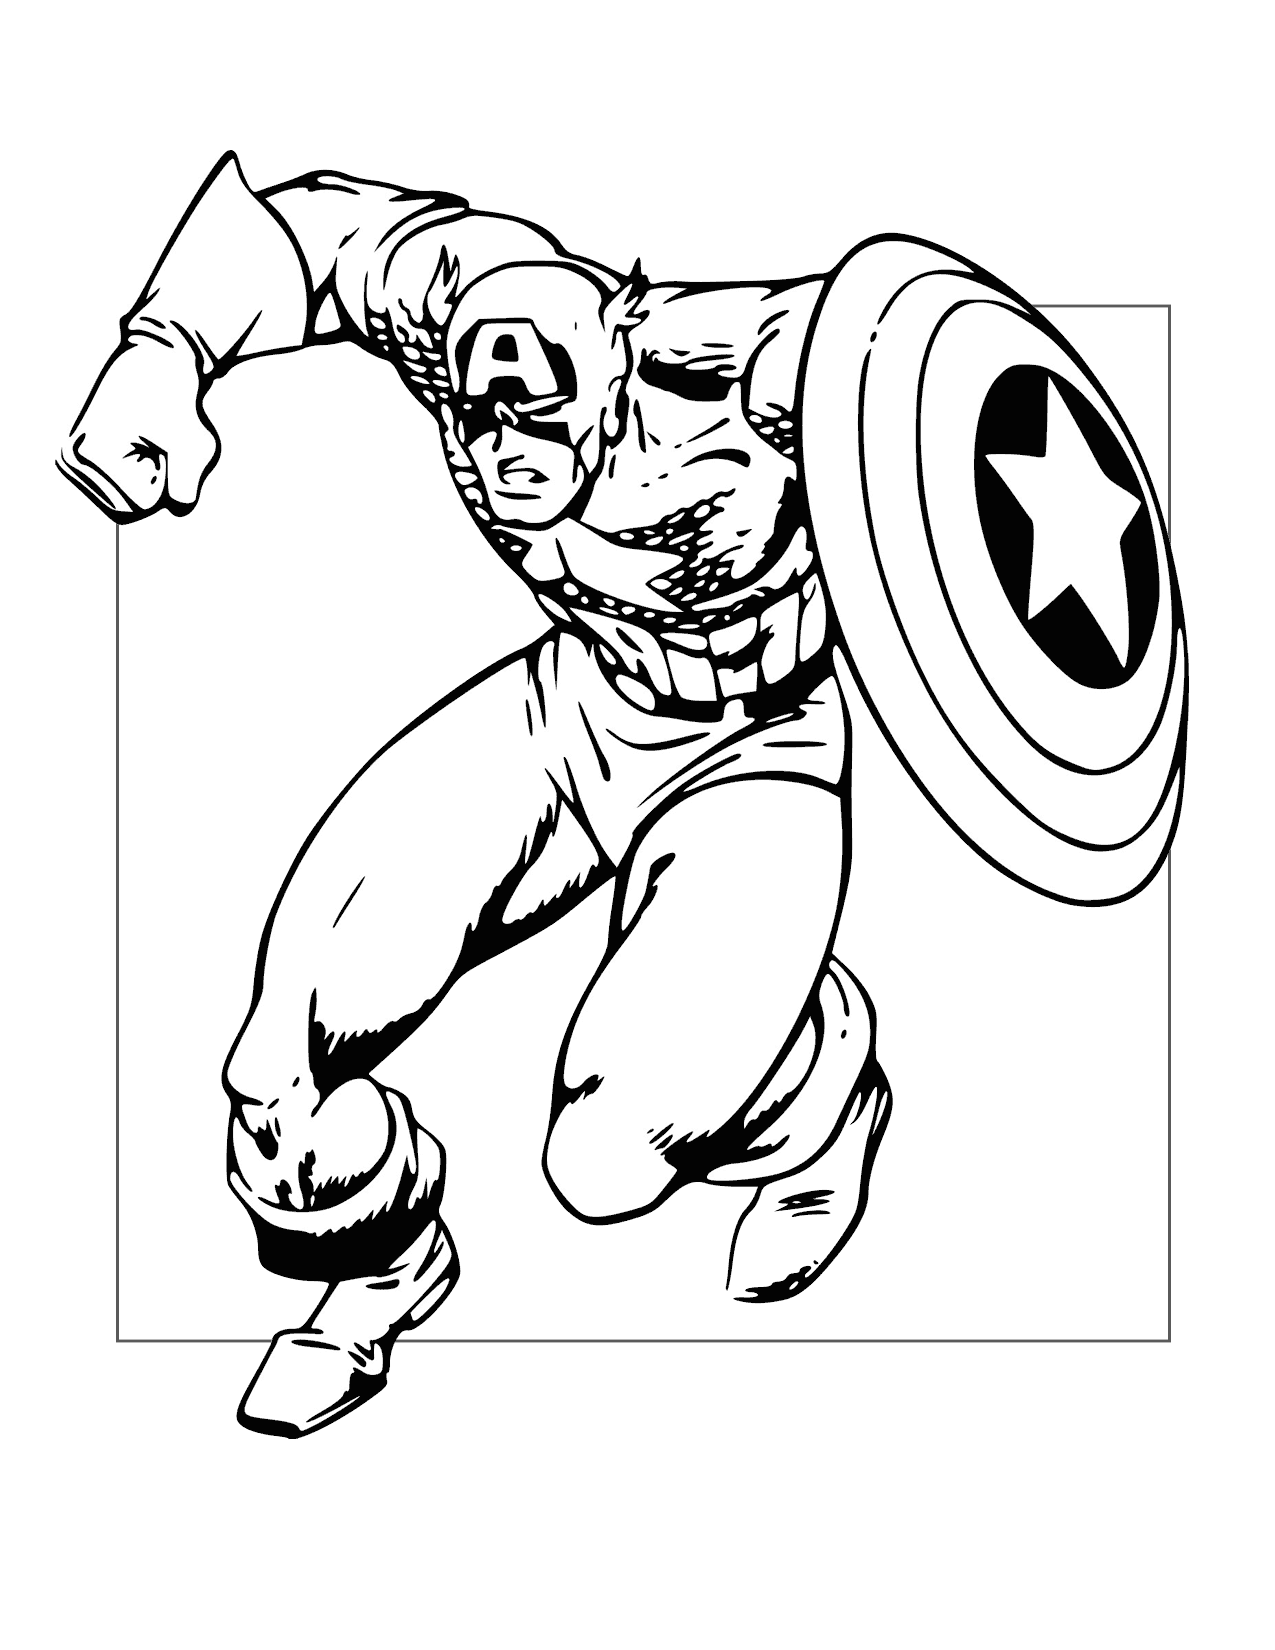 Captain America Comic Coloring Page